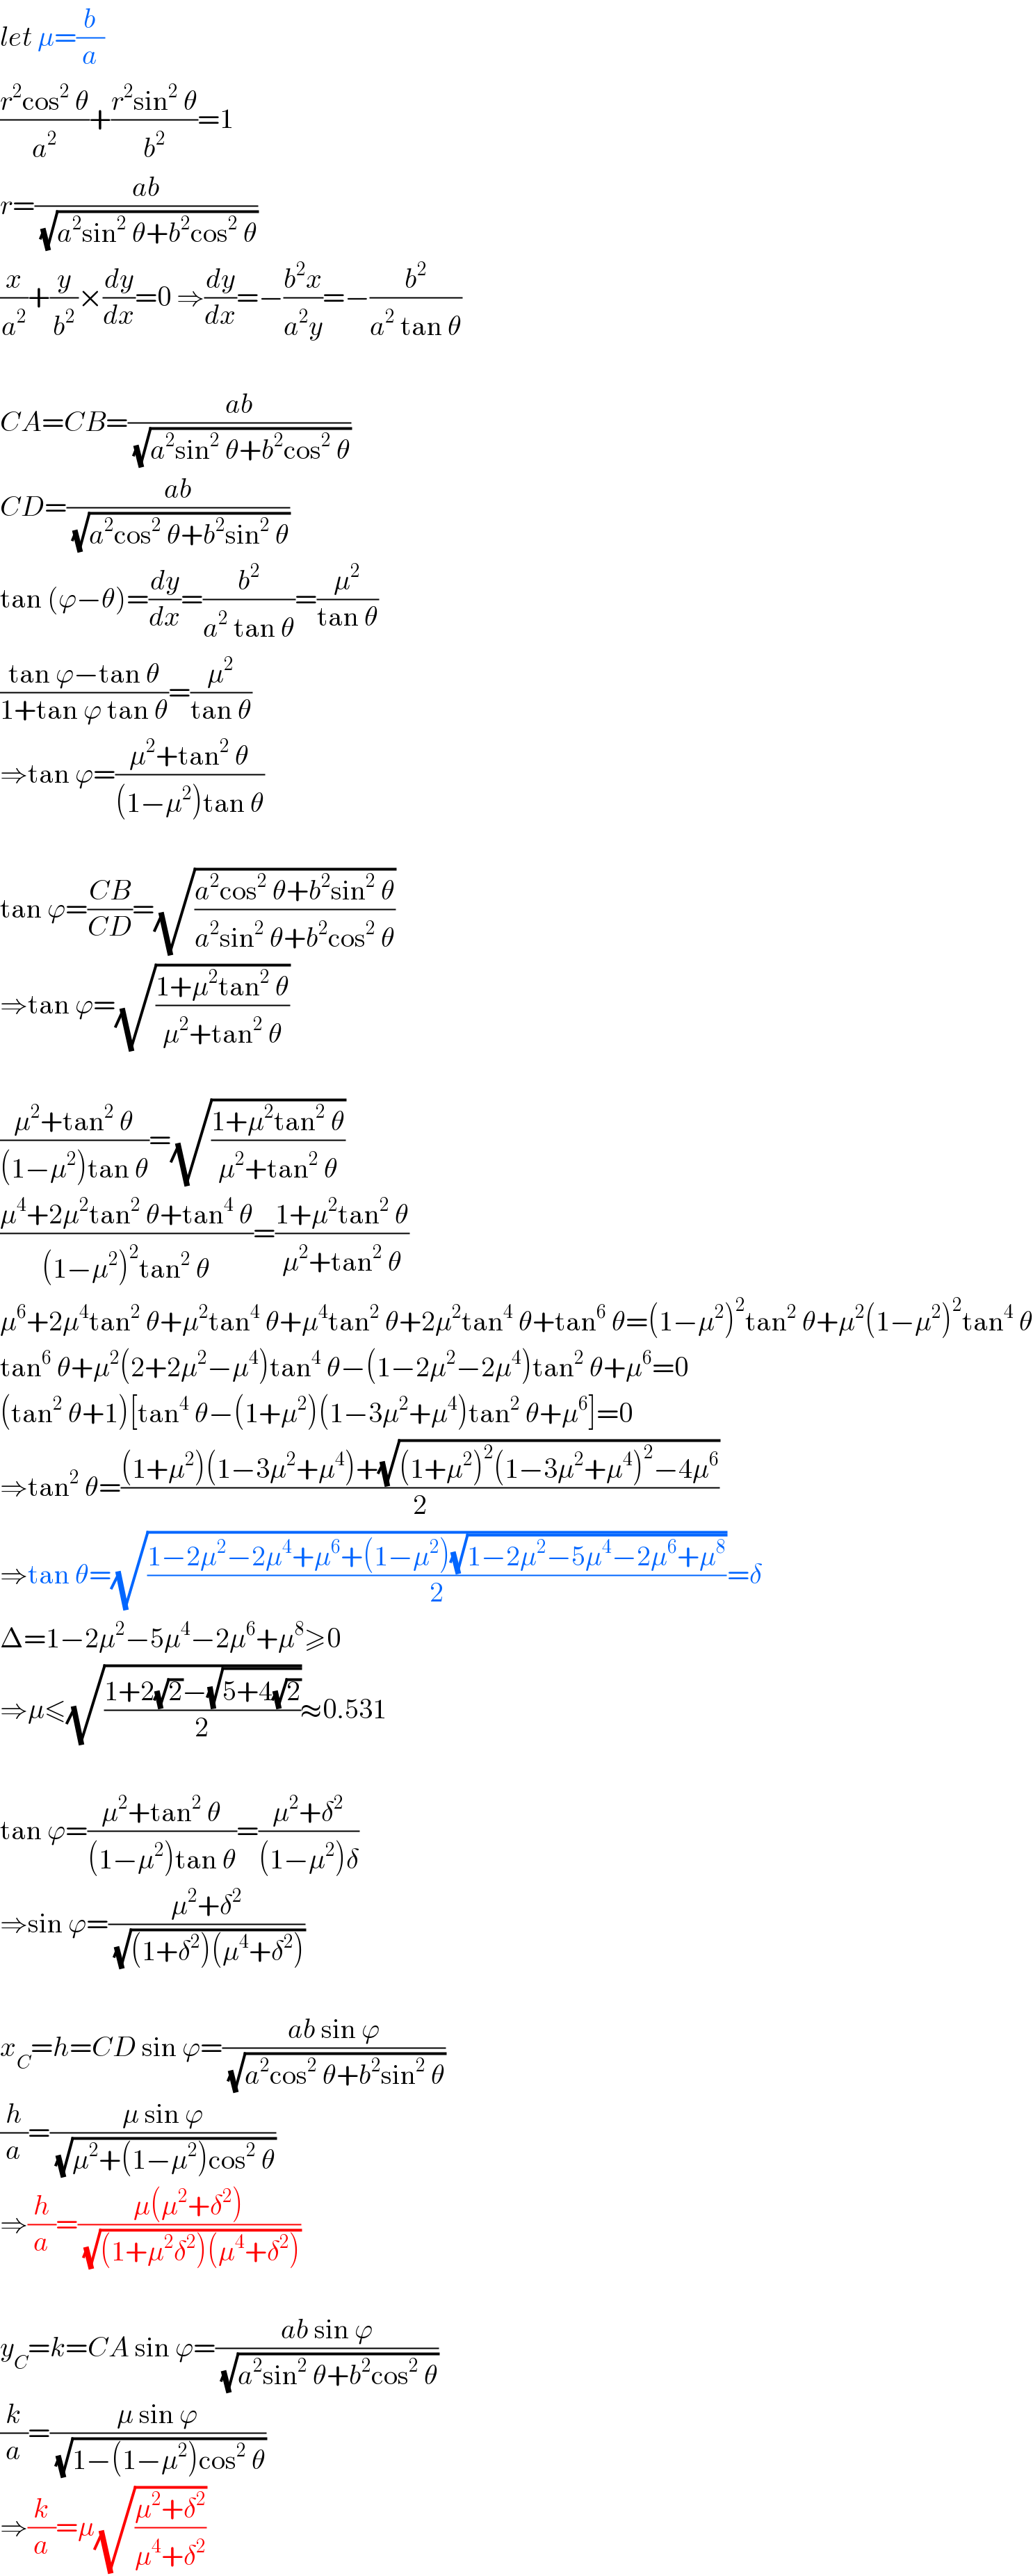 let μ=(b/a)  ((r^2 cos^2  θ)/a^2 )+((r^2 sin^2  θ)/b^2 )=1  r=((ab)/(√(a^2 sin^2  θ+b^2 cos^2  θ)))  (x/a^2 )+(y/b^2 )×(dy/dx)=0 ⇒(dy/dx)=−((b^2 x)/(a^2 y))=−(b^2 /(a^2  tan θ))    CA=CB=((ab)/(√(a^2 sin^2  θ+b^2 cos^2  θ)))  CD=((ab)/(√(a^2 cos^2  θ+b^2 sin^2  θ)))  tan (ϕ−θ)=(dy/dx)=(b^2 /(a^2  tan θ))=(μ^2 /(tan θ))  ((tan ϕ−tan θ)/(1+tan ϕ tan θ))=(μ^2 /(tan θ))  ⇒tan ϕ=((μ^2 +tan^2  θ)/((1−μ^2 )tan θ))    tan ϕ=((CB)/(CD))=(√((a^2 cos^2  θ+b^2 sin^2  θ)/(a^2 sin^2  θ+b^2 cos^2  θ)))  ⇒tan ϕ=(√((1+μ^2 tan^2  θ)/(μ^2 +tan^2  θ)))    ((μ^2 +tan^2  θ)/((1−μ^2 )tan θ))=(√((1+μ^2 tan^2  θ)/(μ^2 +tan^2  θ)))  ((μ^4 +2μ^2 tan^2  θ+tan^4  θ)/((1−μ^2 )^2 tan^2  θ))=((1+μ^2 tan^2  θ)/(μ^2 +tan^2  θ))  μ^6 +2μ^4 tan^2  θ+μ^2 tan^4  θ+μ^4 tan^2  θ+2μ^2 tan^4  θ+tan^6  θ=(1−μ^2 )^2 tan^2  θ+μ^2 (1−μ^2 )^2 tan^4  θ  tan^6  θ+μ^2 (2+2μ^2 −μ^4 )tan^4  θ−(1−2μ^2 −2μ^4 )tan^2  θ+μ^6 =0  (tan^2  θ+1)[tan^4  θ−(1+μ^2 )(1−3μ^2 +μ^4 )tan^2  θ+μ^6 ]=0  ⇒tan^2  θ=(((1+μ^2 )(1−3μ^2 +μ^4 )+(√((1+μ^2 )^2 (1−3μ^2 +μ^4 )^2 −4μ^6 )))/2)  ⇒tan θ=(√((1−2μ^2 −2μ^4 +μ^6 +(1−μ^2 )(√(1−2μ^2 −5μ^4 −2μ^6 +μ^8 )))/2))=δ  Δ=1−2μ^2 −5μ^4 −2μ^6 +μ^8 ≥0  ⇒μ≤(√((1+2(√2)−(√(5+4(√2))))/2))≈0.531    tan ϕ=((μ^2 +tan^2  θ)/((1−μ^2 )tan θ))=((μ^2 +δ^2 )/((1−μ^2 )δ))  ⇒sin ϕ=((μ^2 +δ^2 )/(√((1+δ^2 )(μ^4 +δ^2 ))))    x_C =h=CD sin ϕ=((ab sin ϕ)/(√(a^2 cos^2  θ+b^2 sin^2  θ)))  (h/a)=((μ sin ϕ)/(√(μ^2 +(1−μ^2 )cos^2  θ)))  ⇒(h/a)=((μ(μ^2 +δ^2 ))/(√((1+μ^2 δ^2 )(μ^4 +δ^2 ))))    y_C =k=CA sin ϕ=((ab sin ϕ)/(√(a^2 sin^2  θ+b^2 cos^2  θ)))  (k/a)=((μ sin ϕ)/(√(1−(1−μ^2 )cos^2  θ)))  ⇒(k/a)=μ(√((μ^2 +δ^2 )/(μ^4 +δ^2 )))  